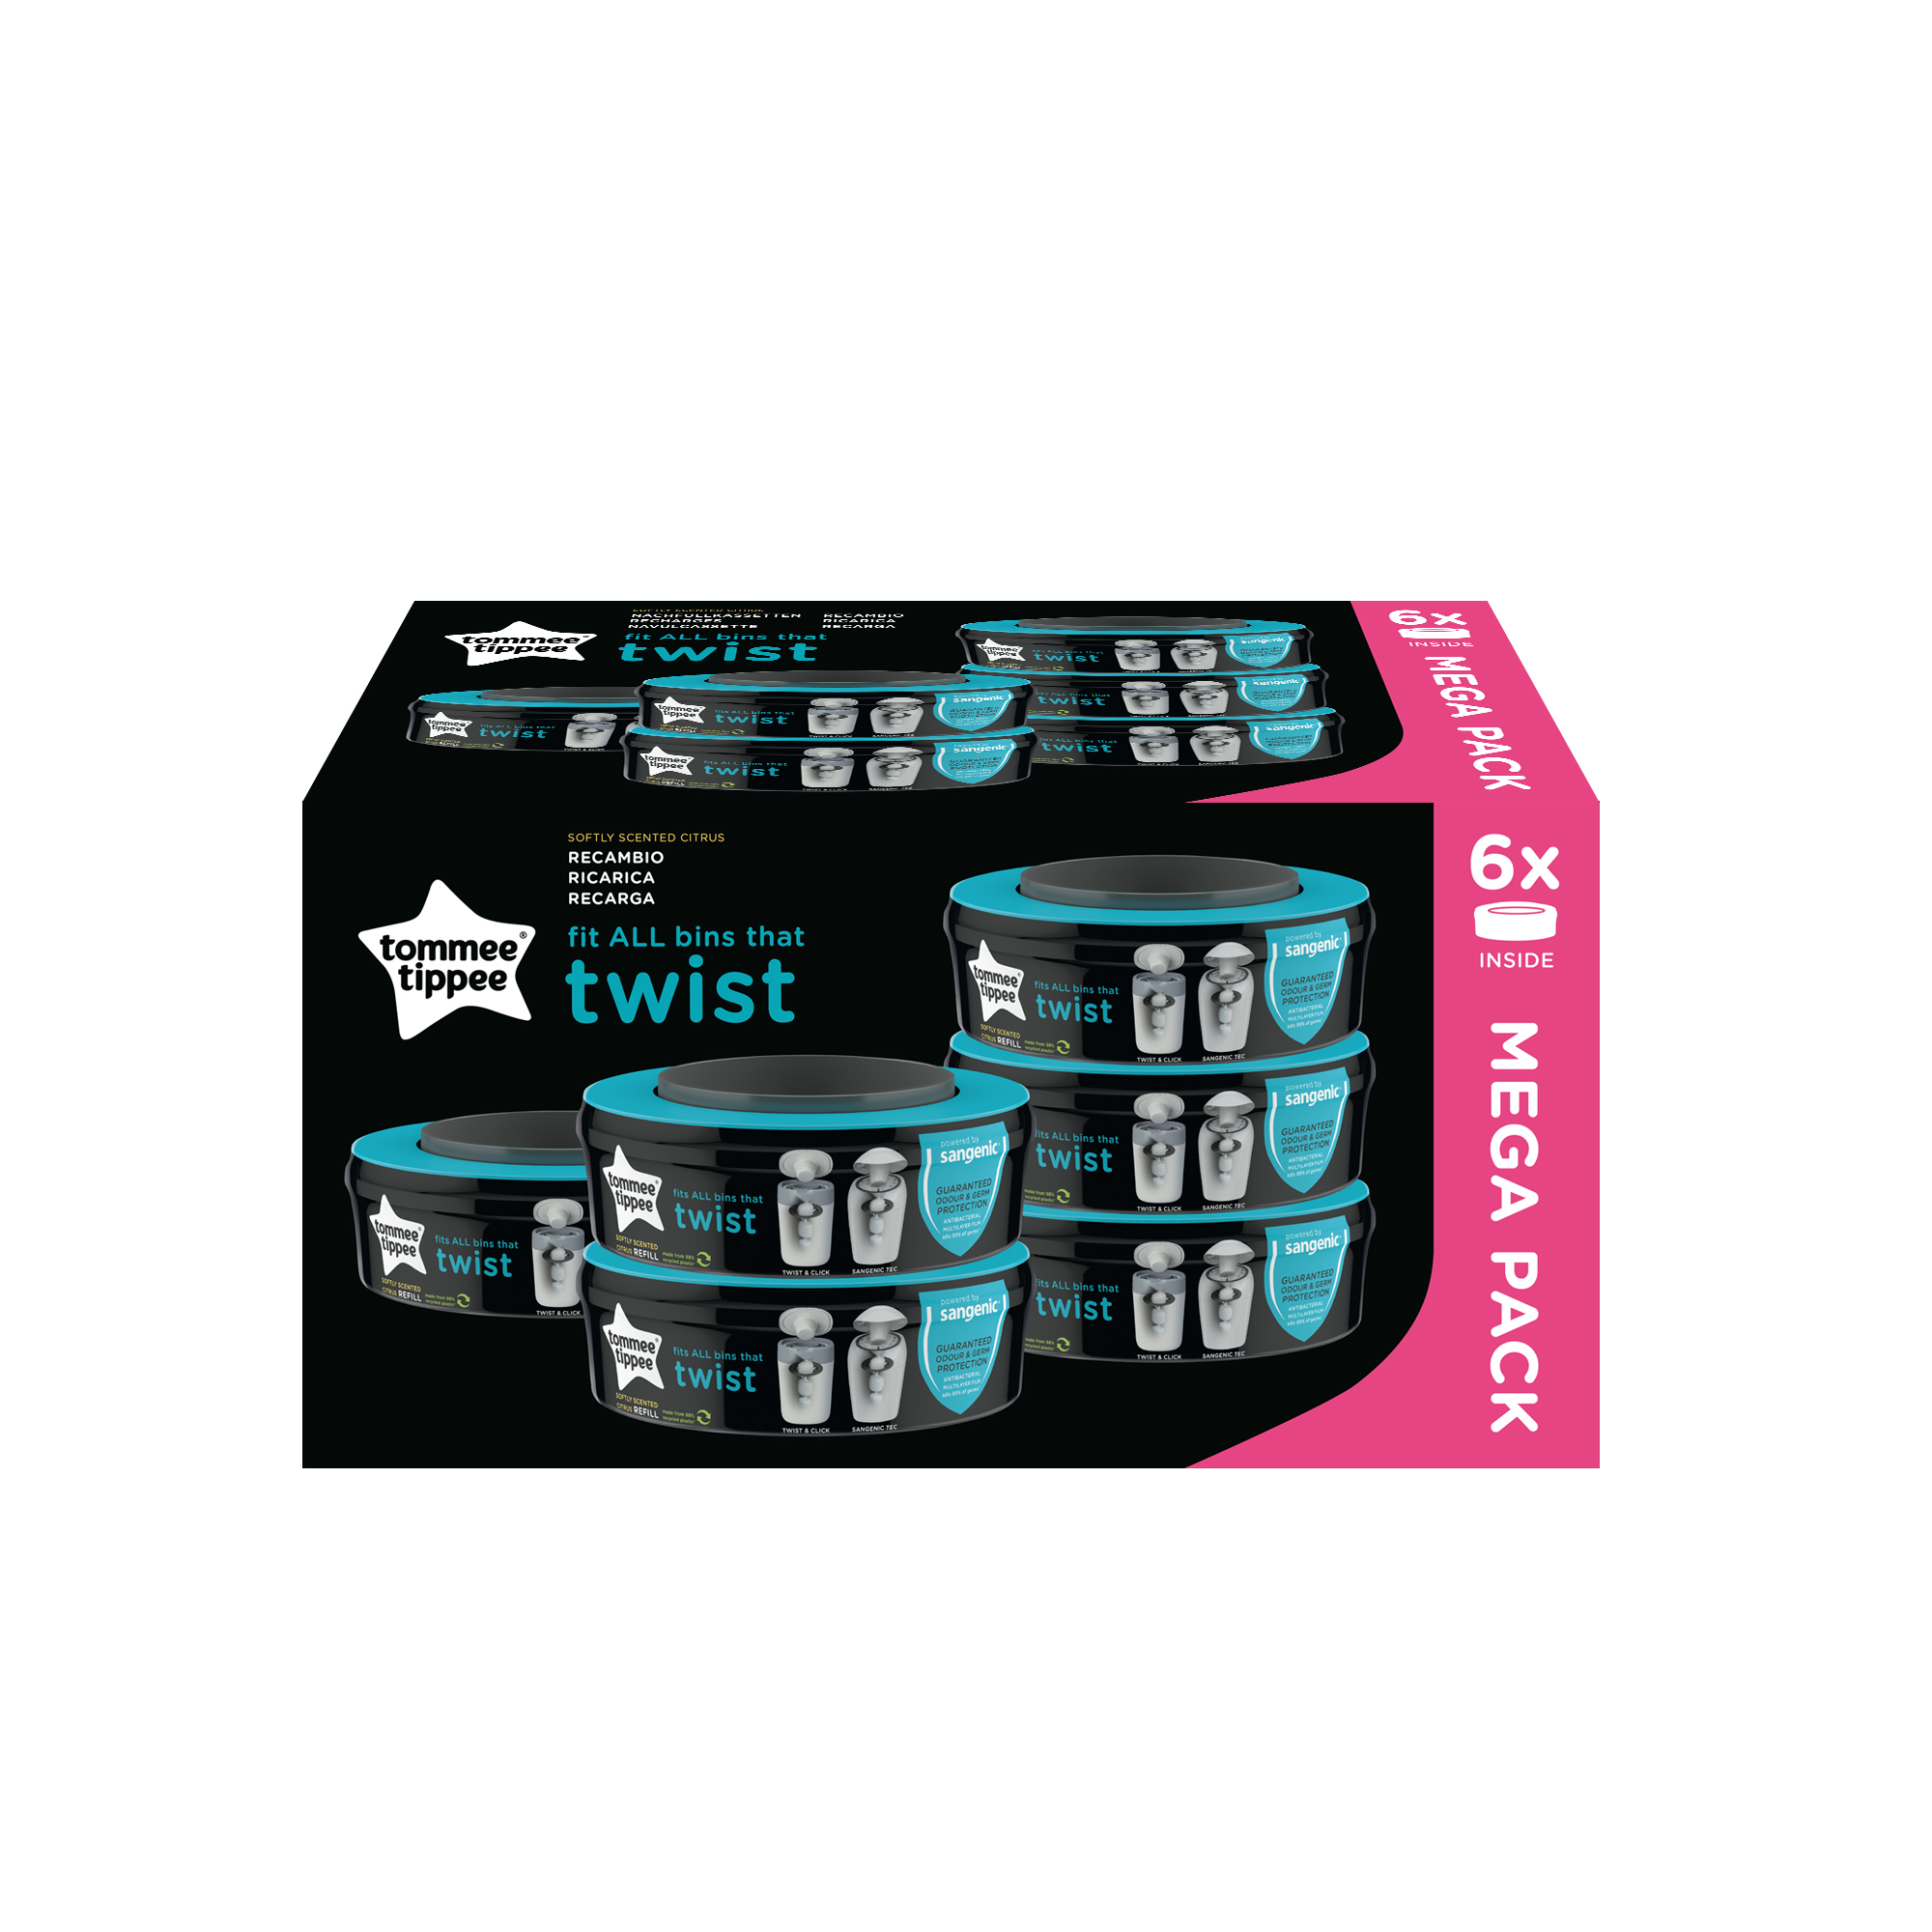 Rezerve Twist & Click, Tommee Tippee, 6 buc image 2